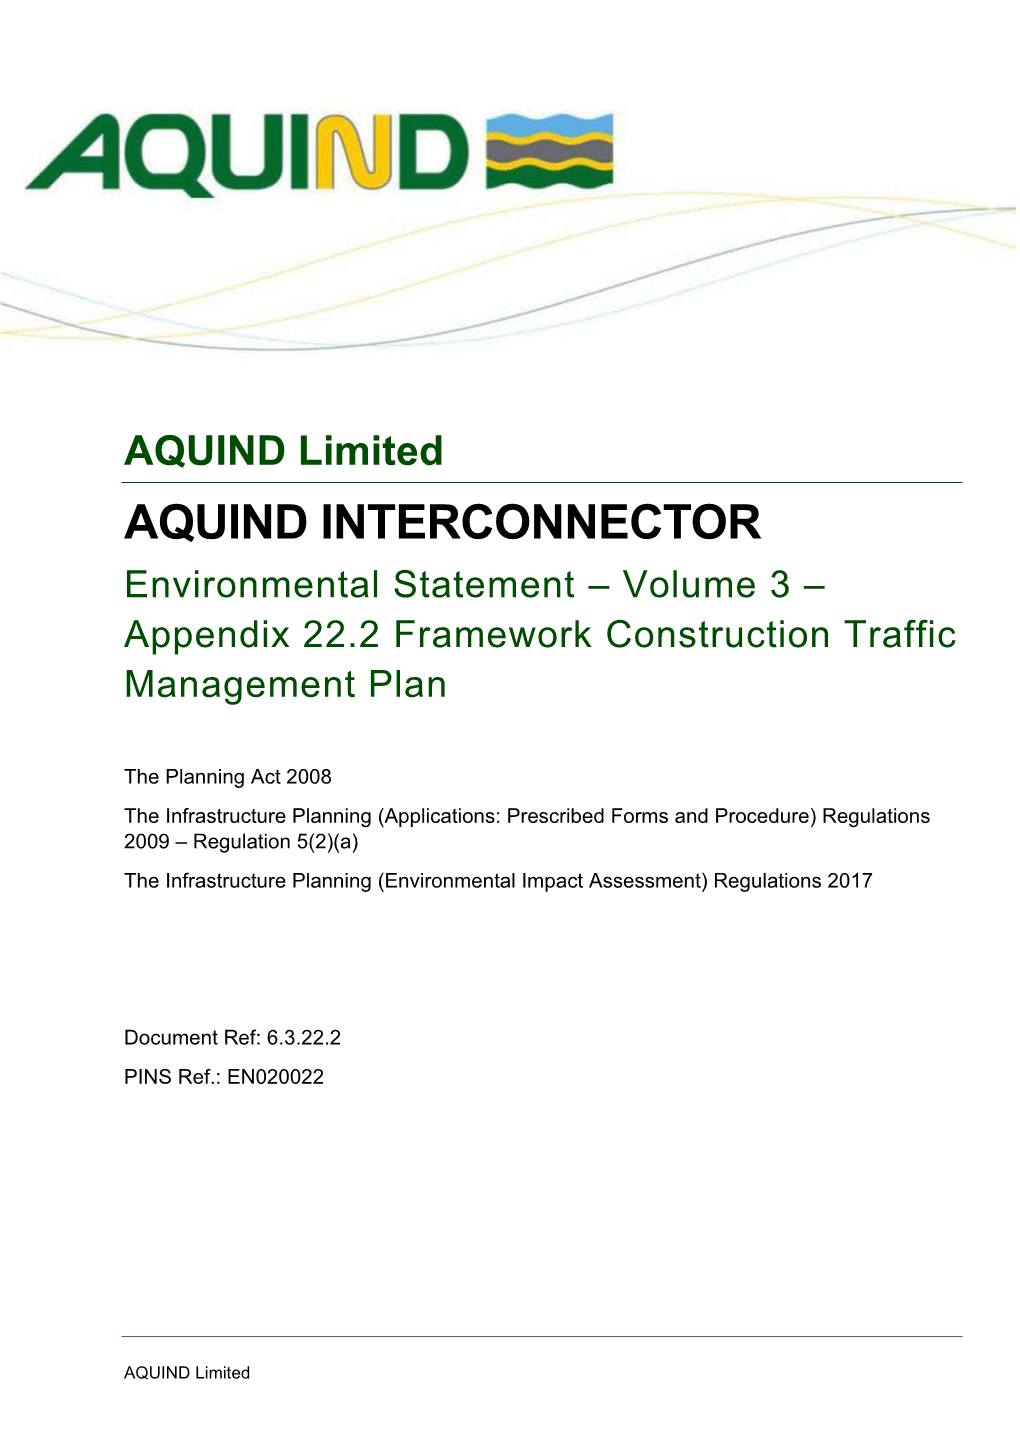 Framework Construction Traffic Management Plan Rev-004